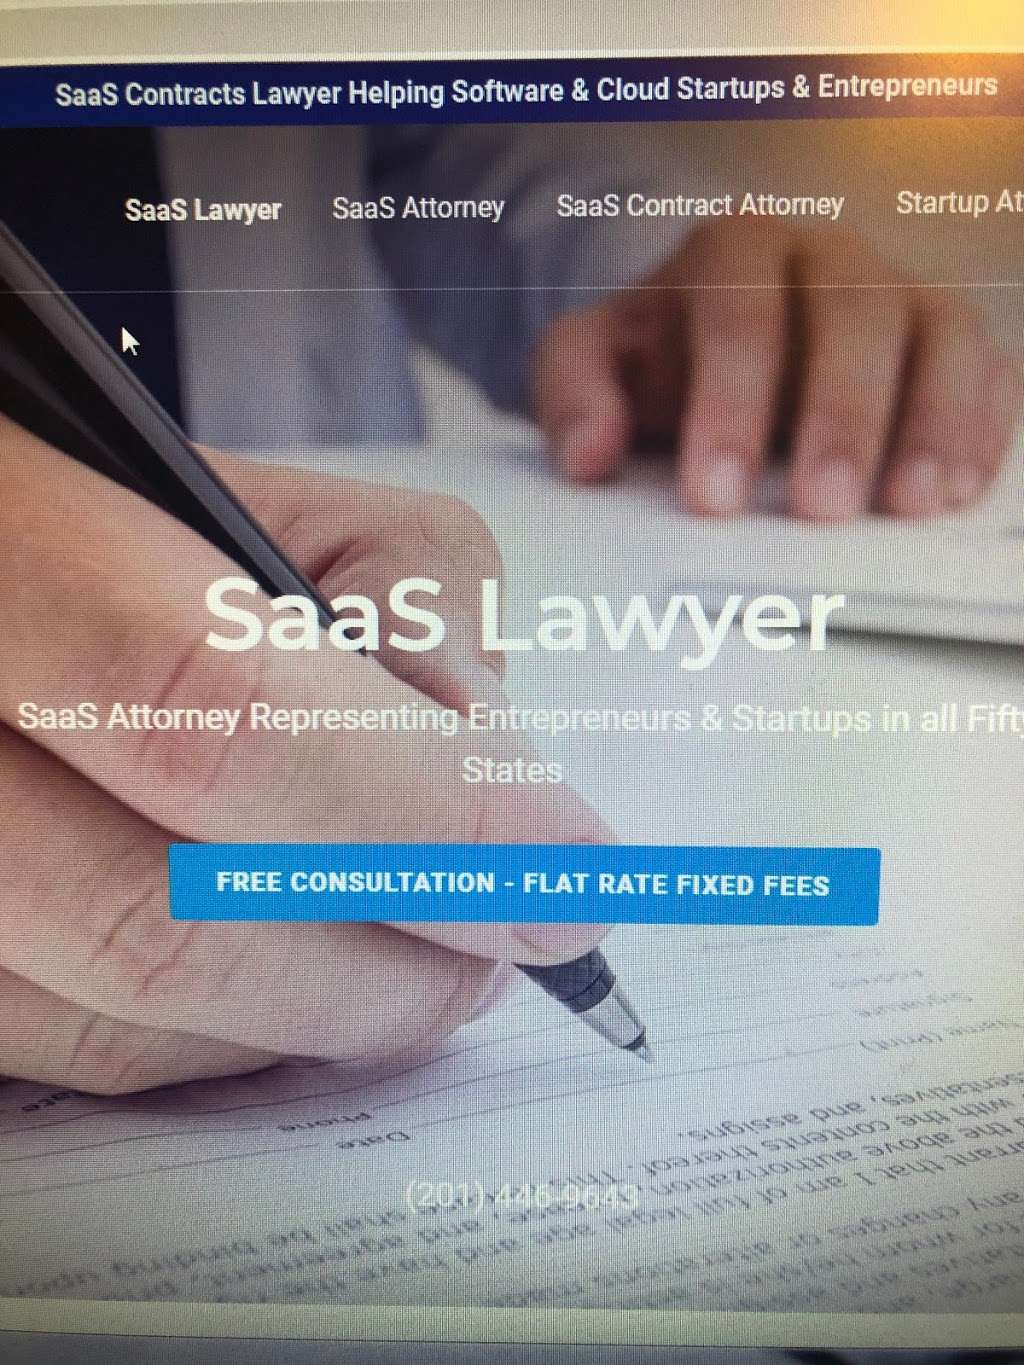 SaaS Agreements Lawyer | 36 Highland Rd, Glen Rock, NJ 07452 | Phone: (201) 446-9643